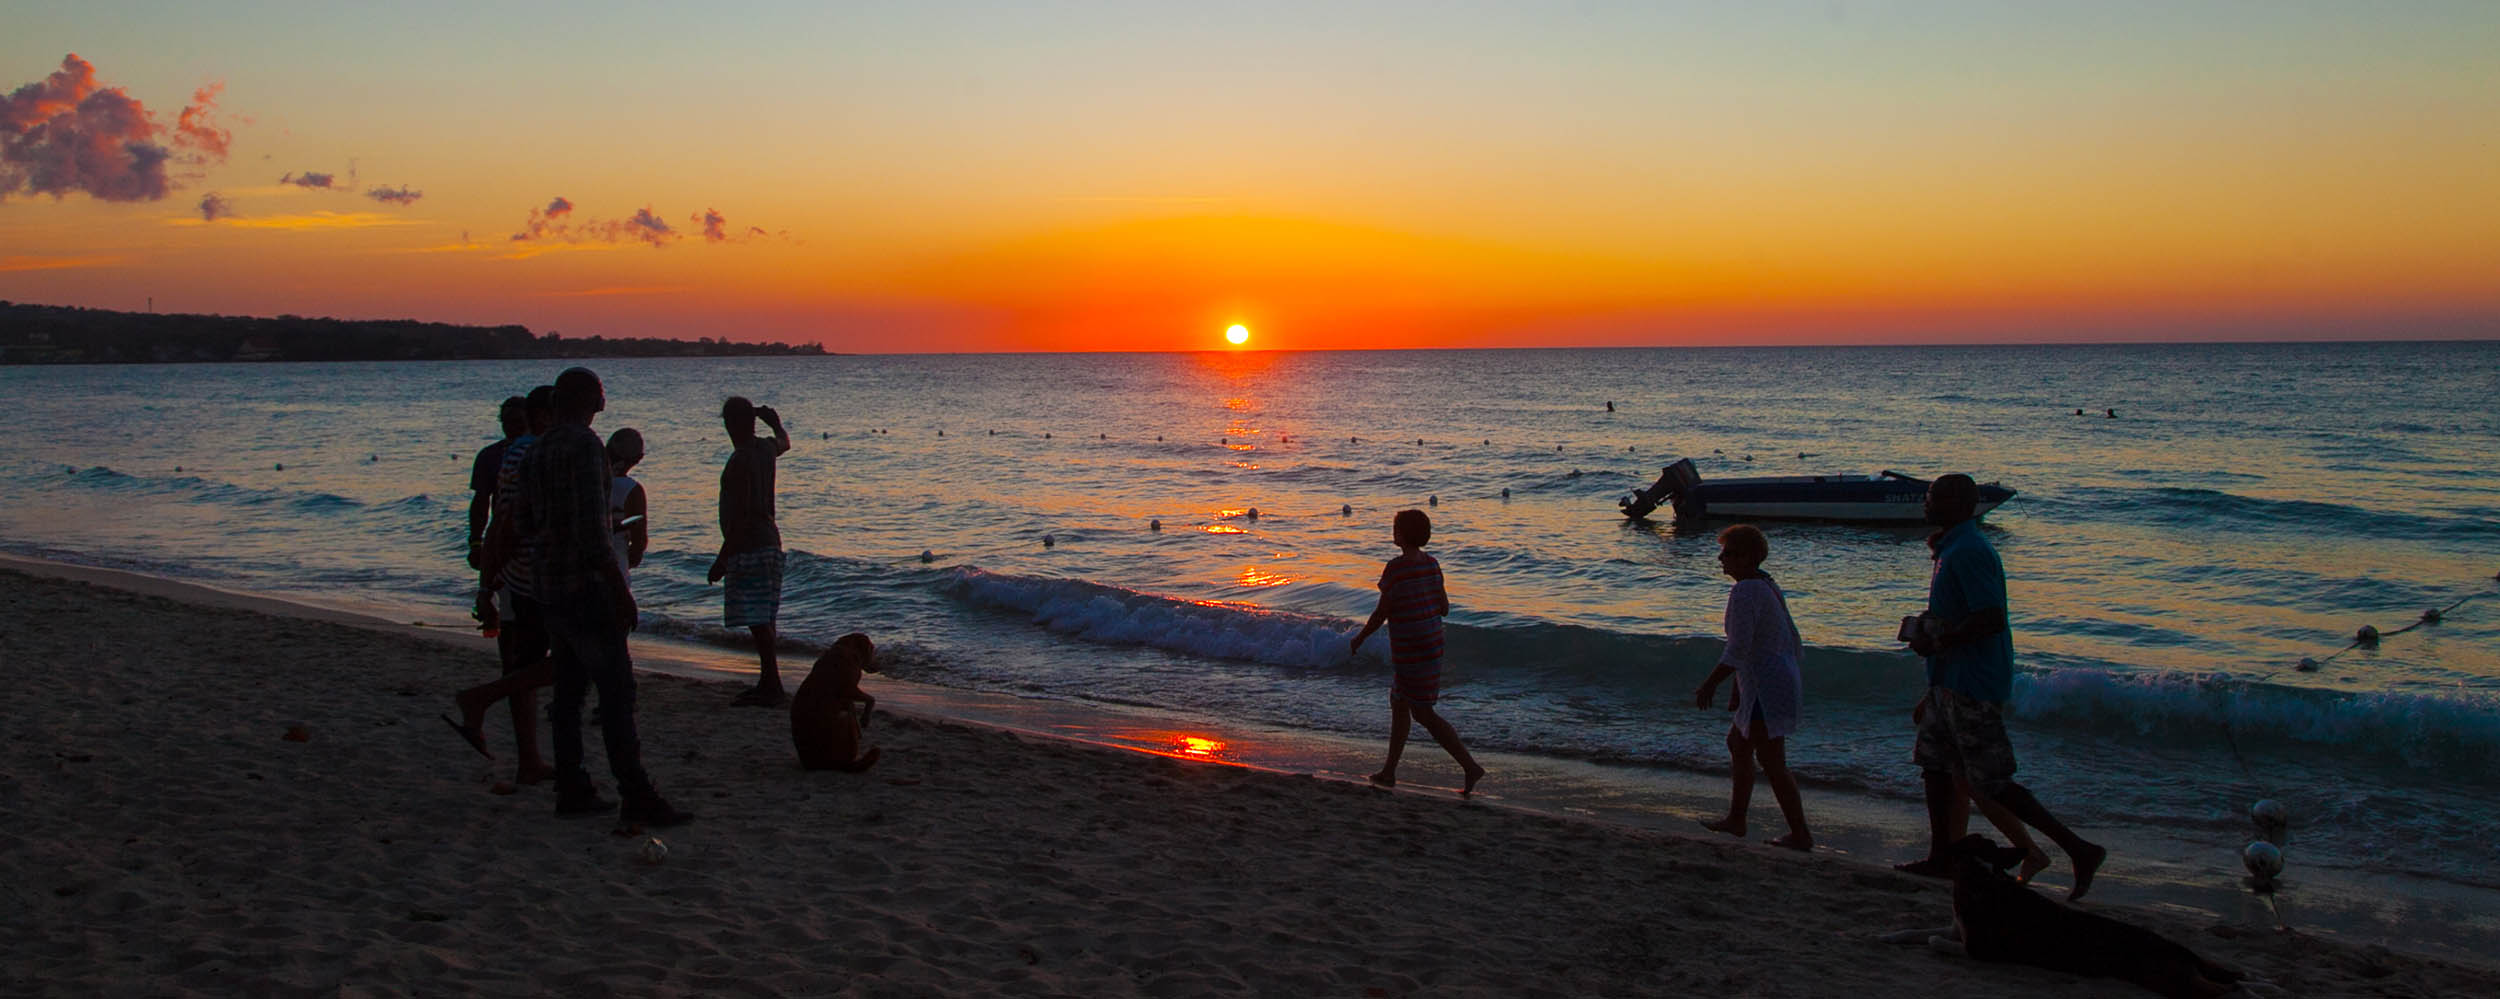 Caribbean Sunset @ Negril Beach, Negril Jamaica